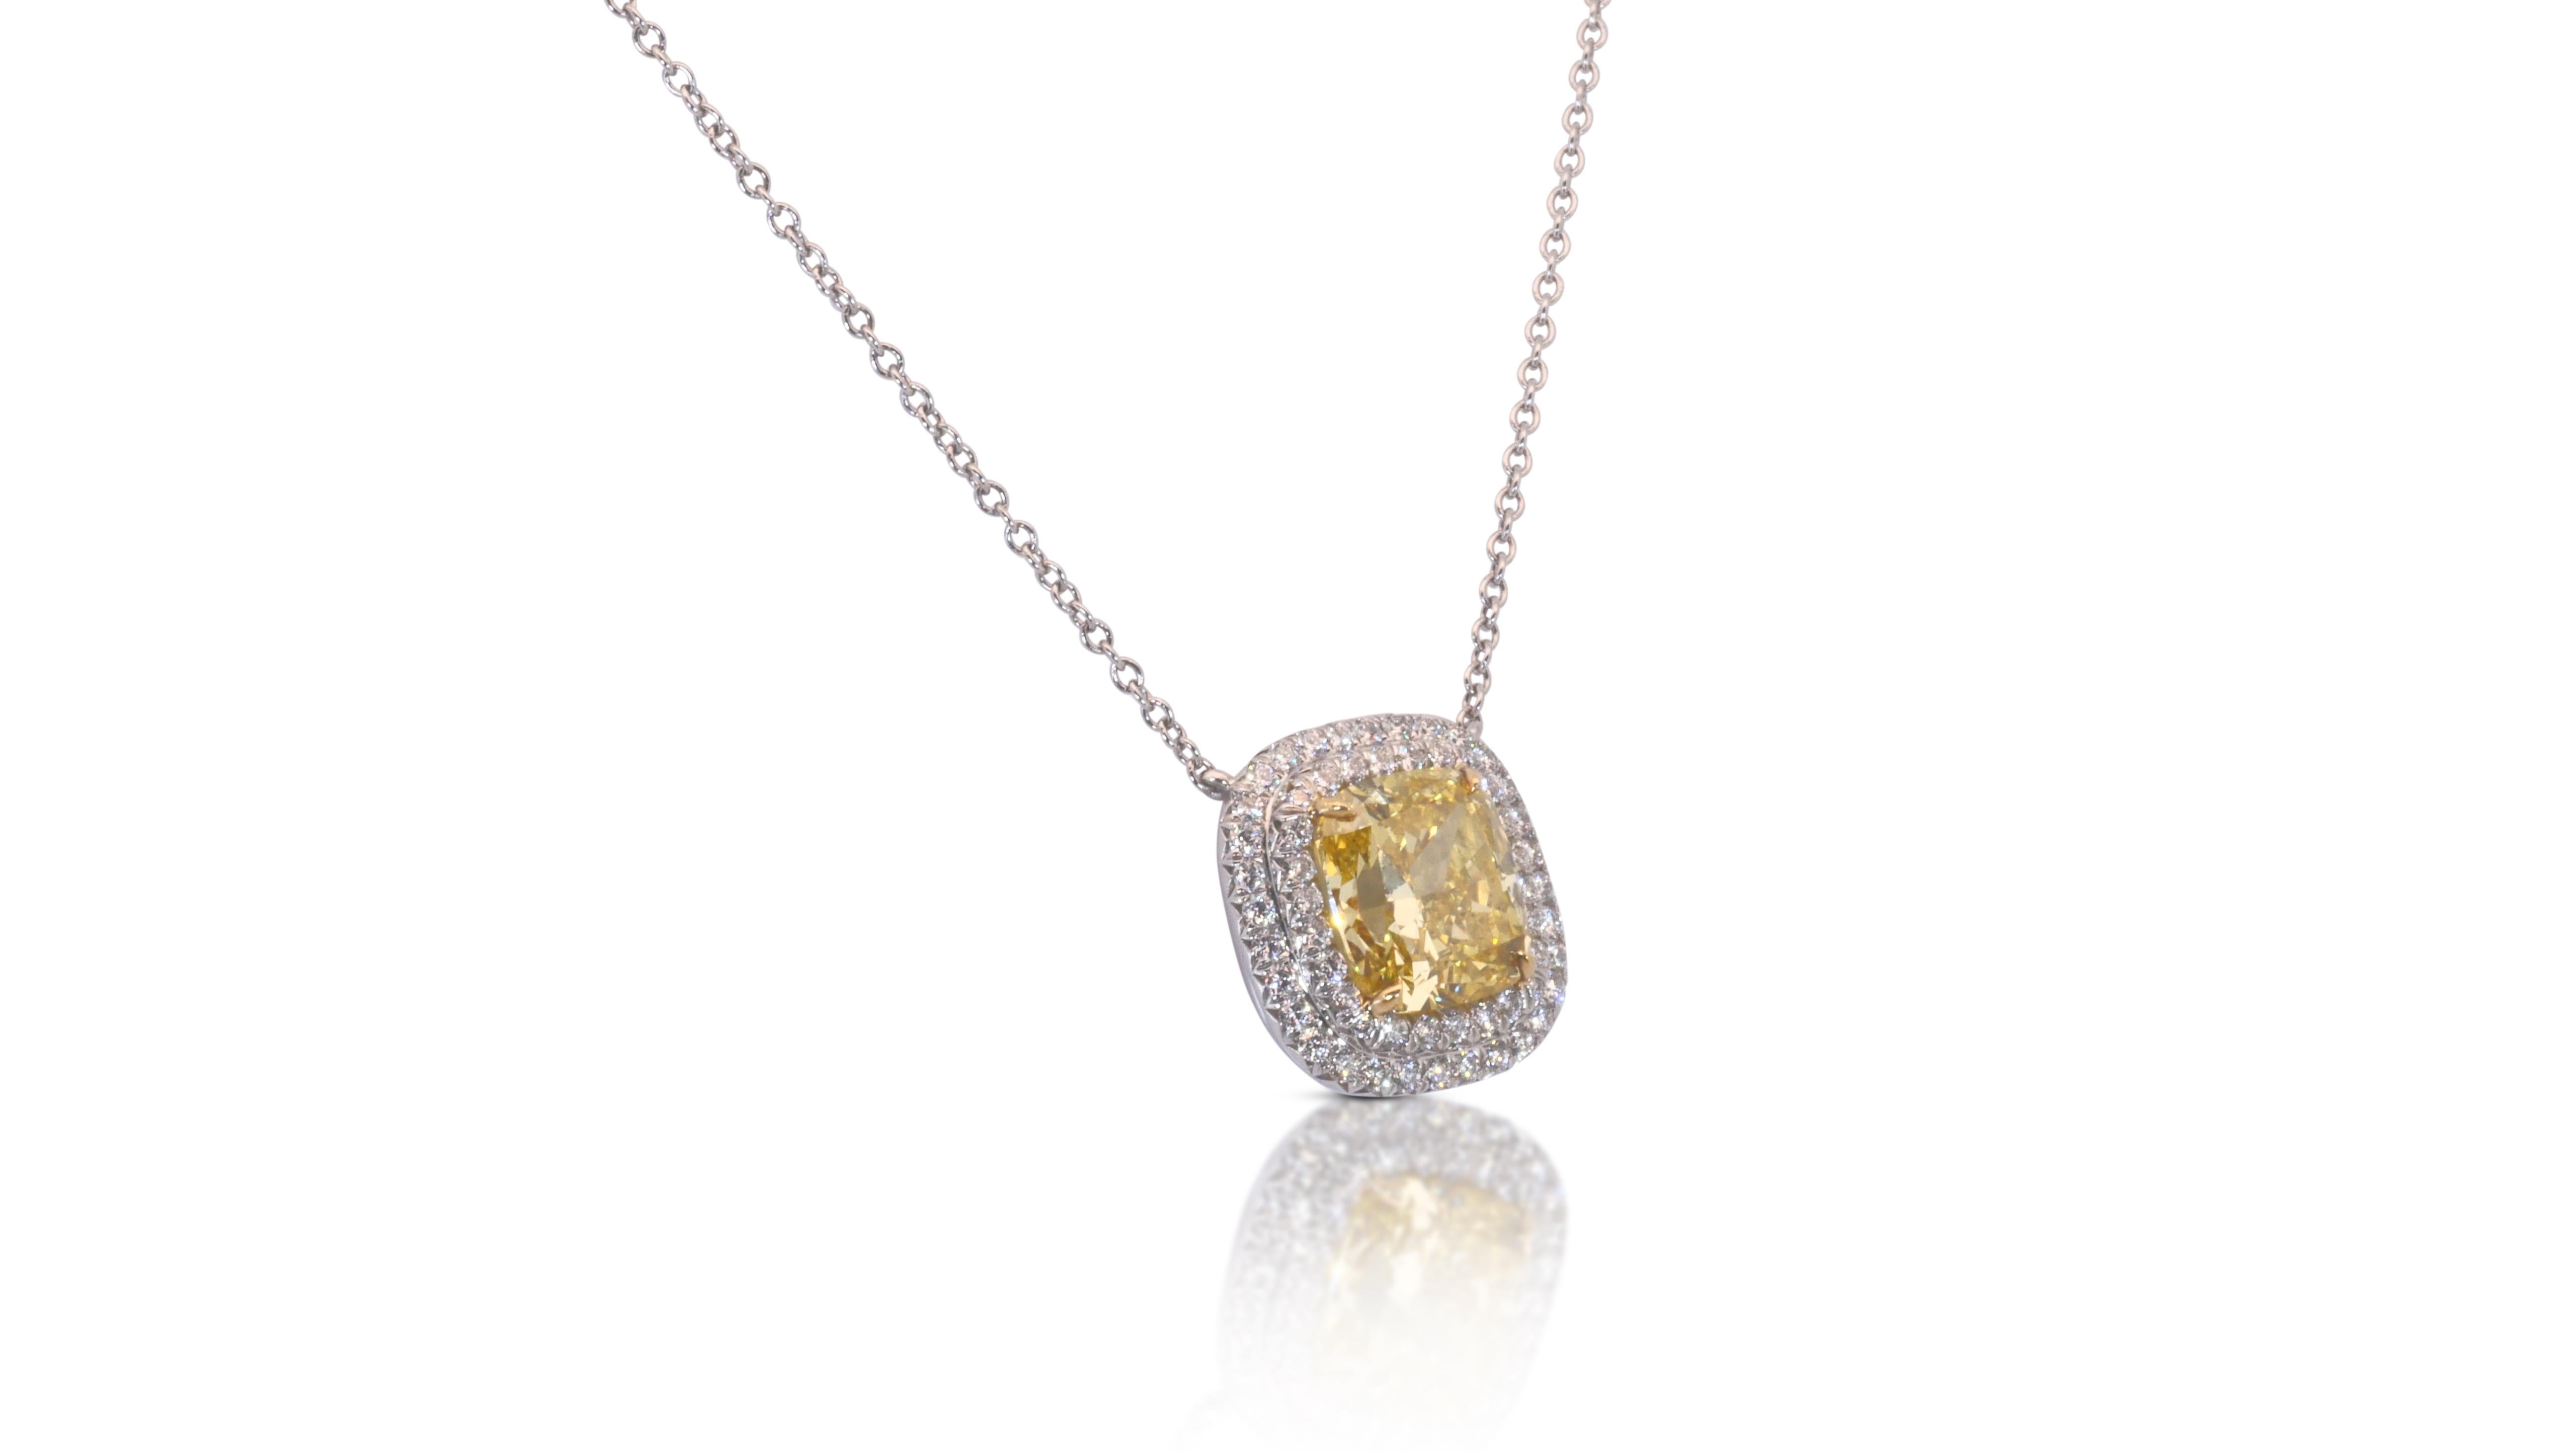 18k White Gold Necklace & Platinum Pendant 3.26ct Natural Diamonds TIFANNY&CO. For Sale 2